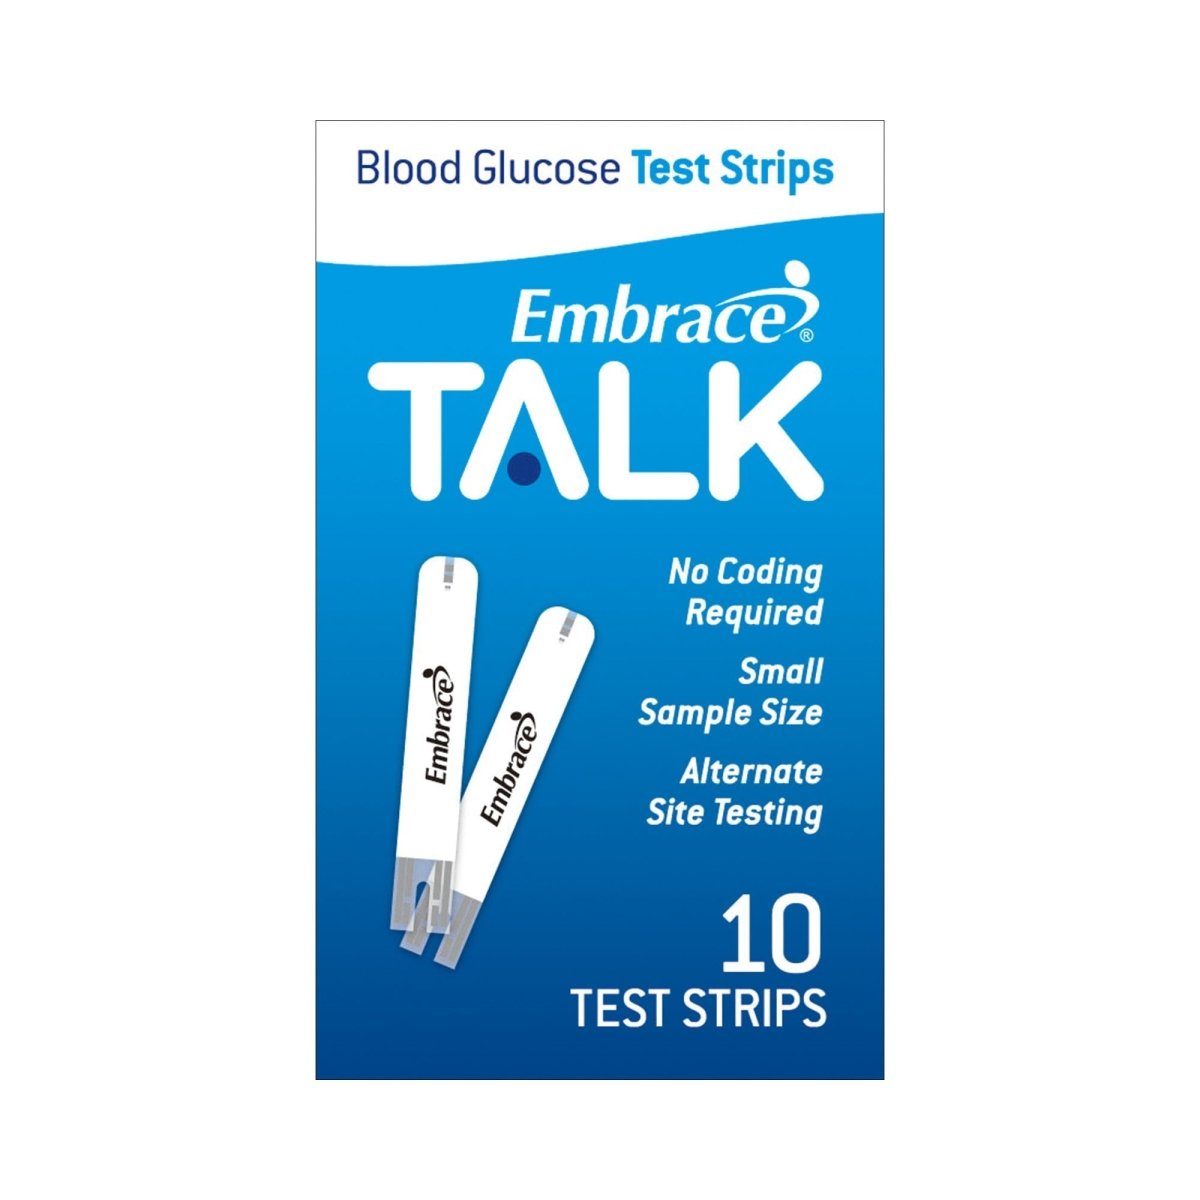 Embrace Talk Blood Glucose Test Strips - 1146707_VL - 1